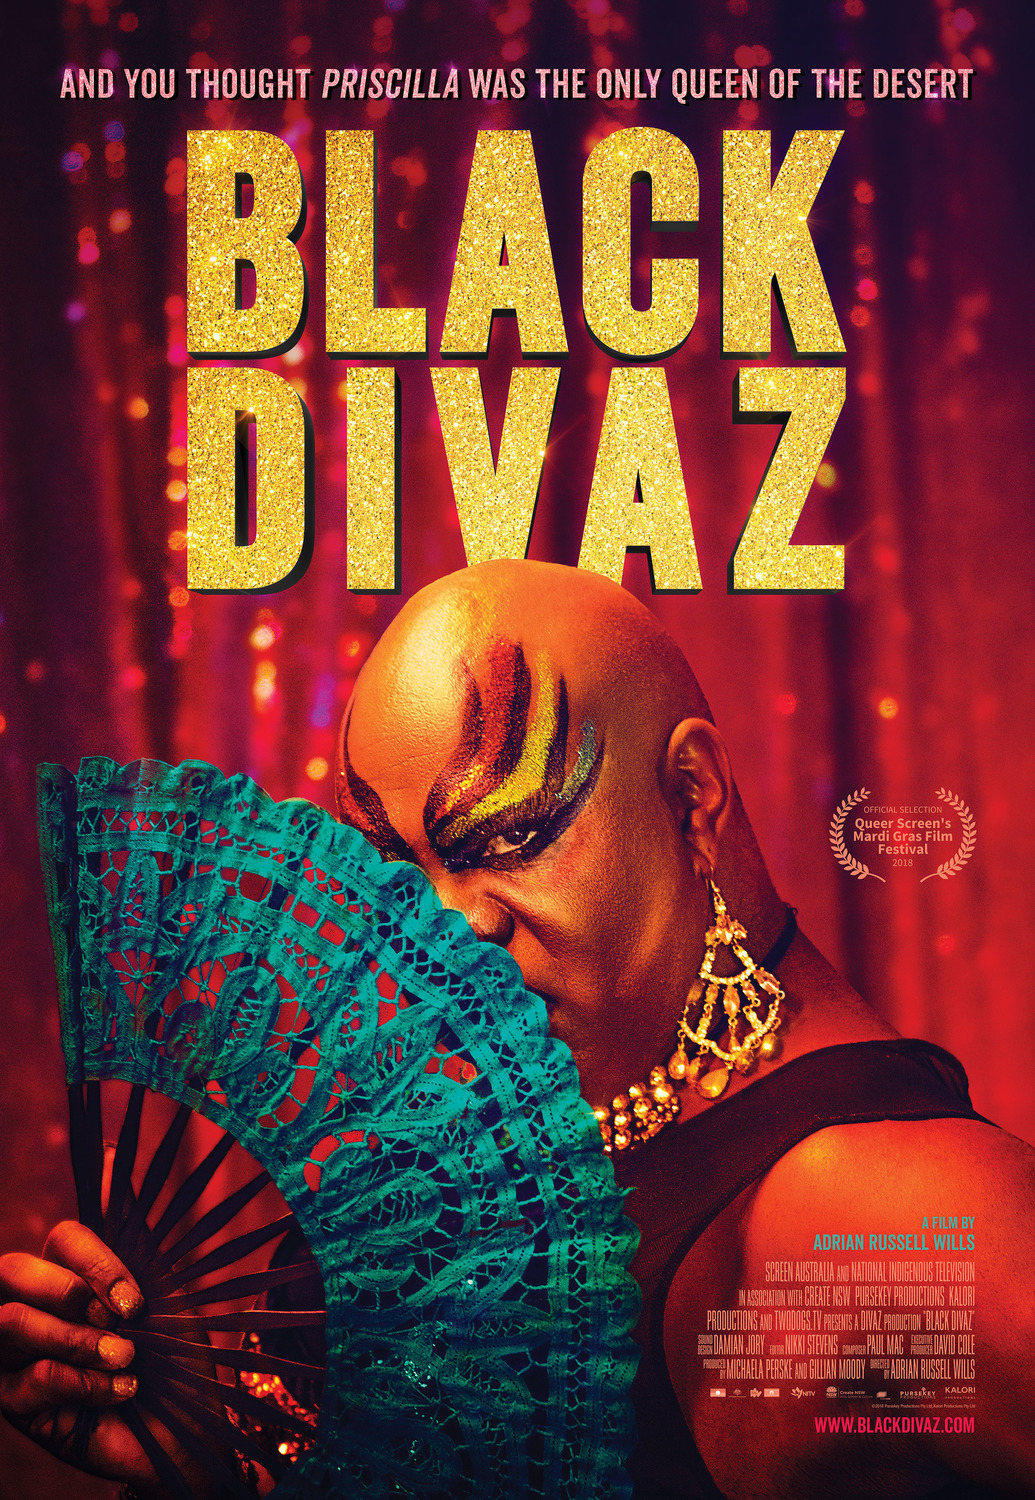 Extra Large Movie Poster Image for Black Divaz 